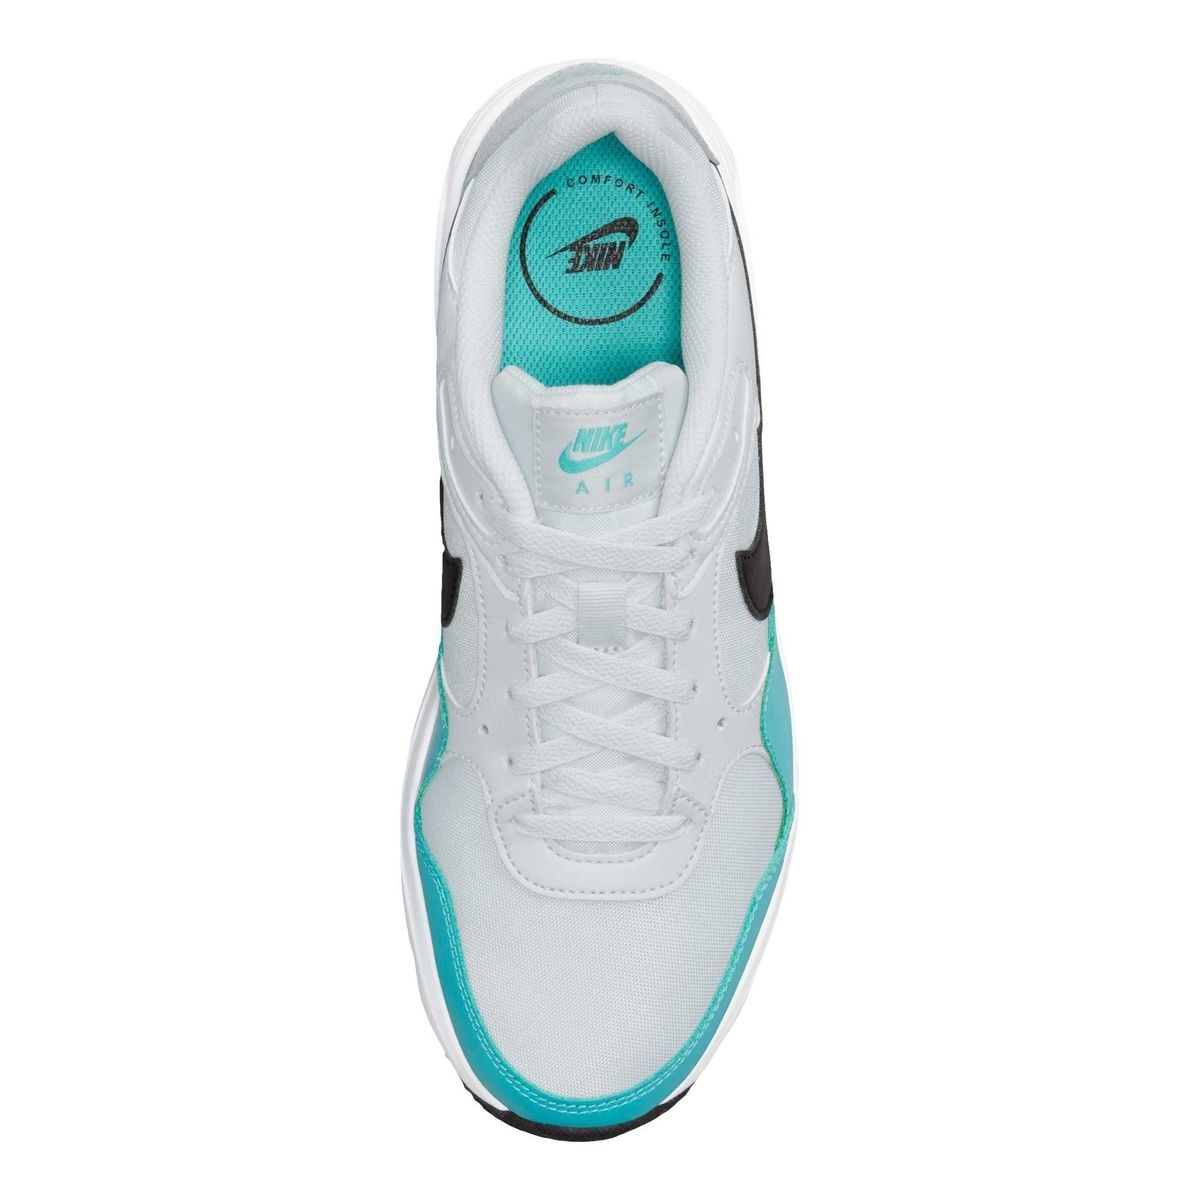 Chaussures de sport homme Nike air max sc gris